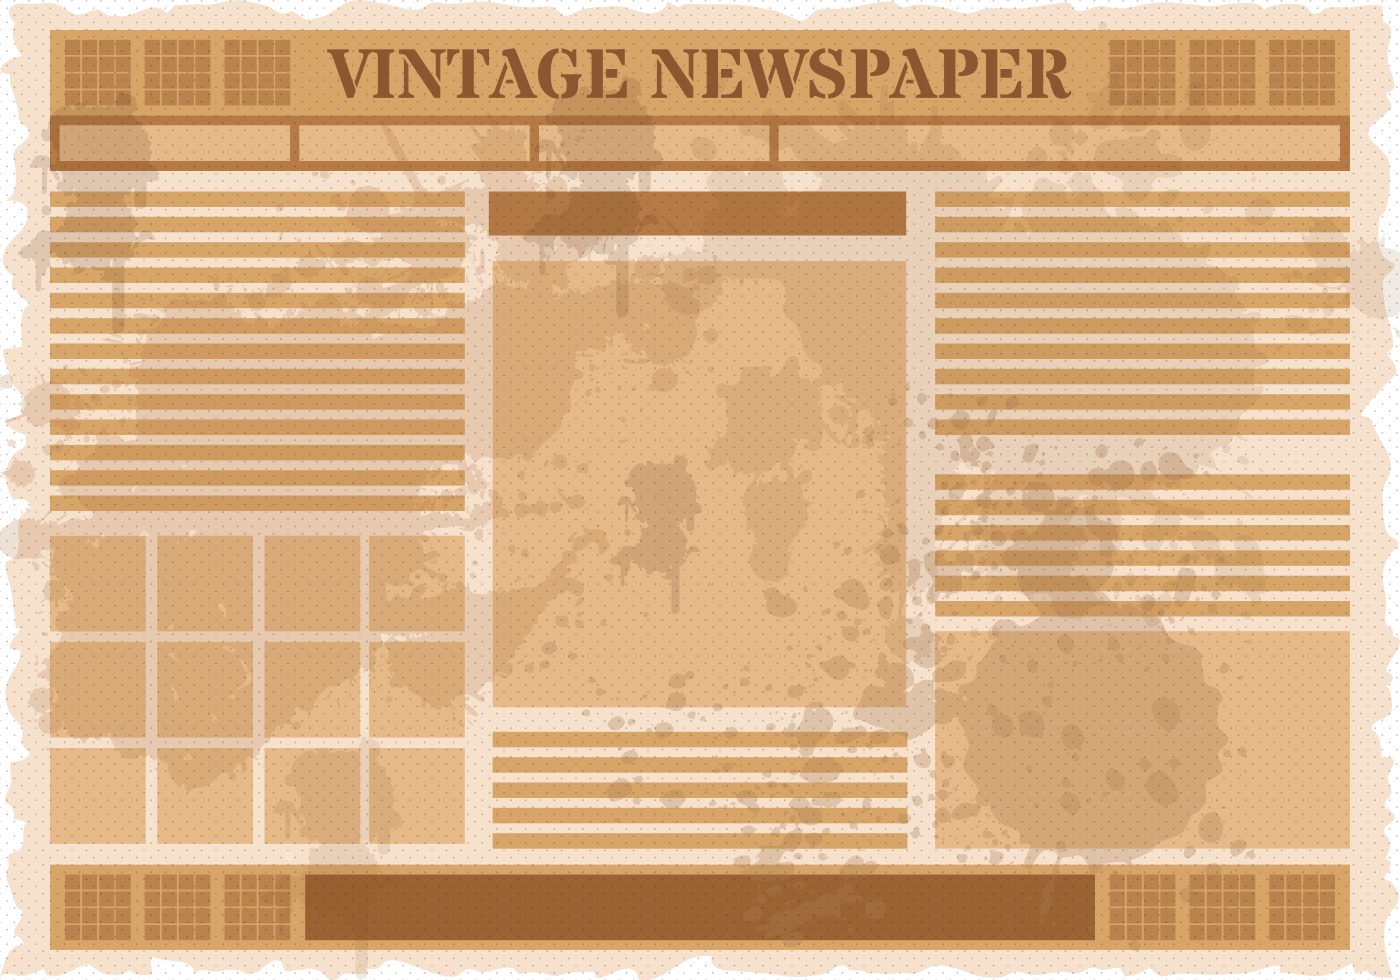 Old Blank Newspaper Template